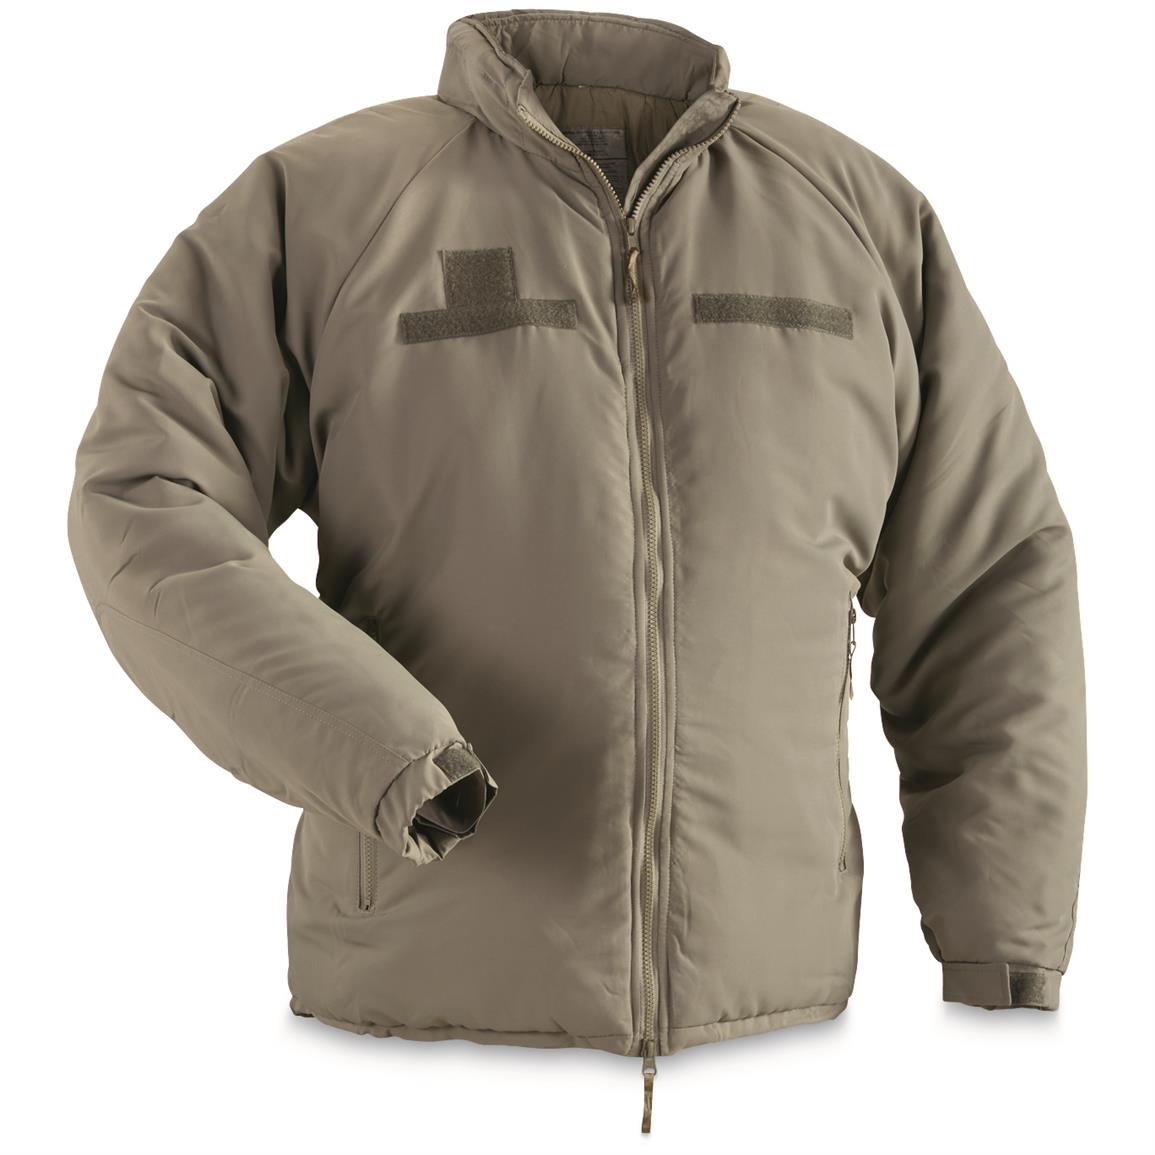 US Army Primaloft Gen-III Extreme Cold Weather Parka Jacket EXCELLENT 